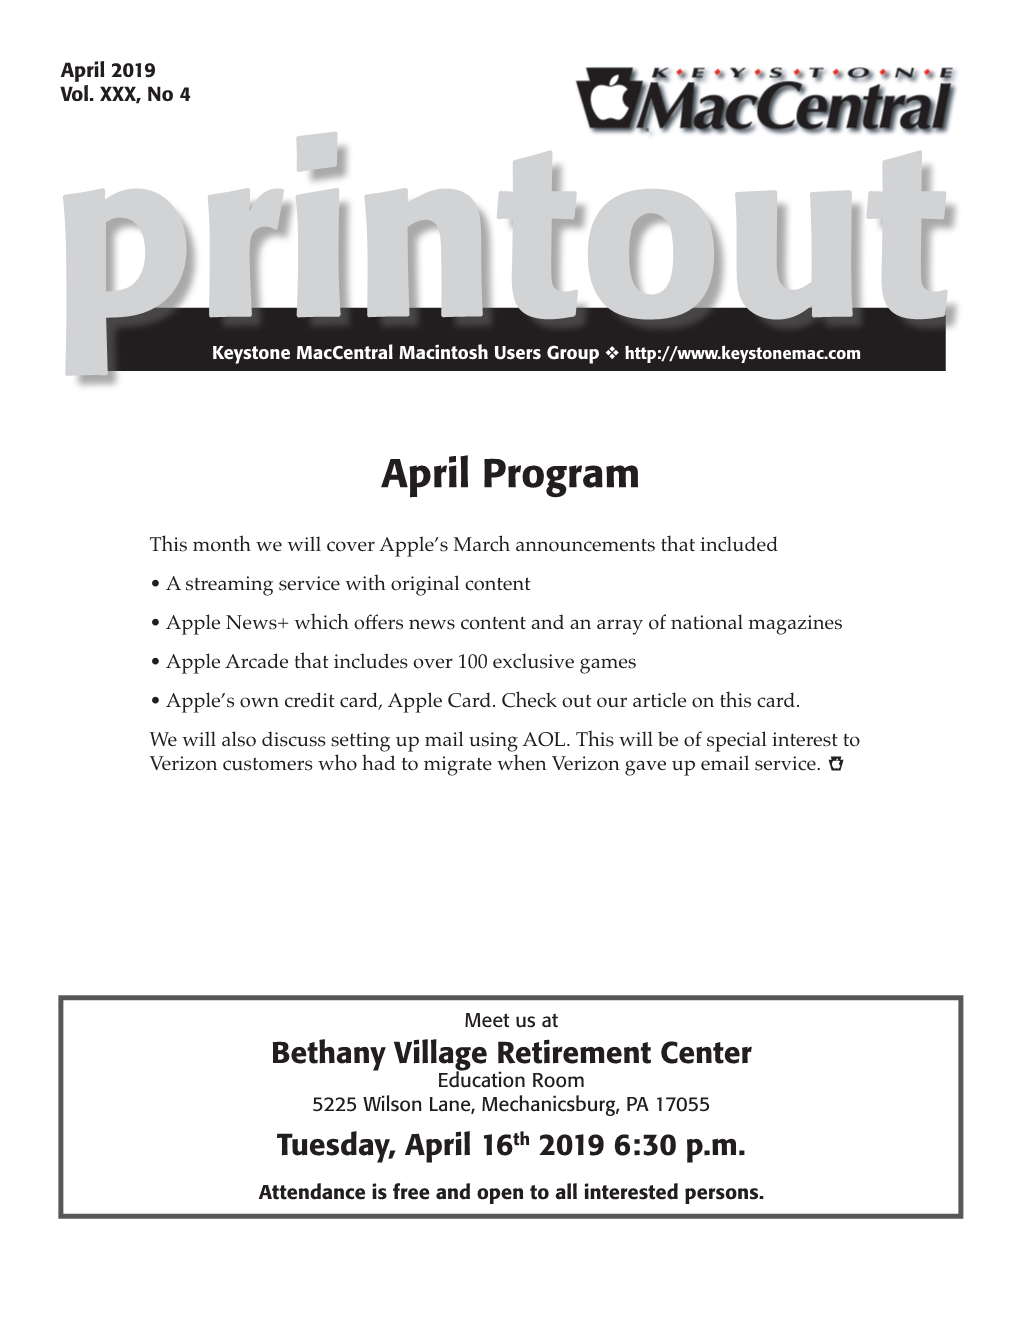 April Program